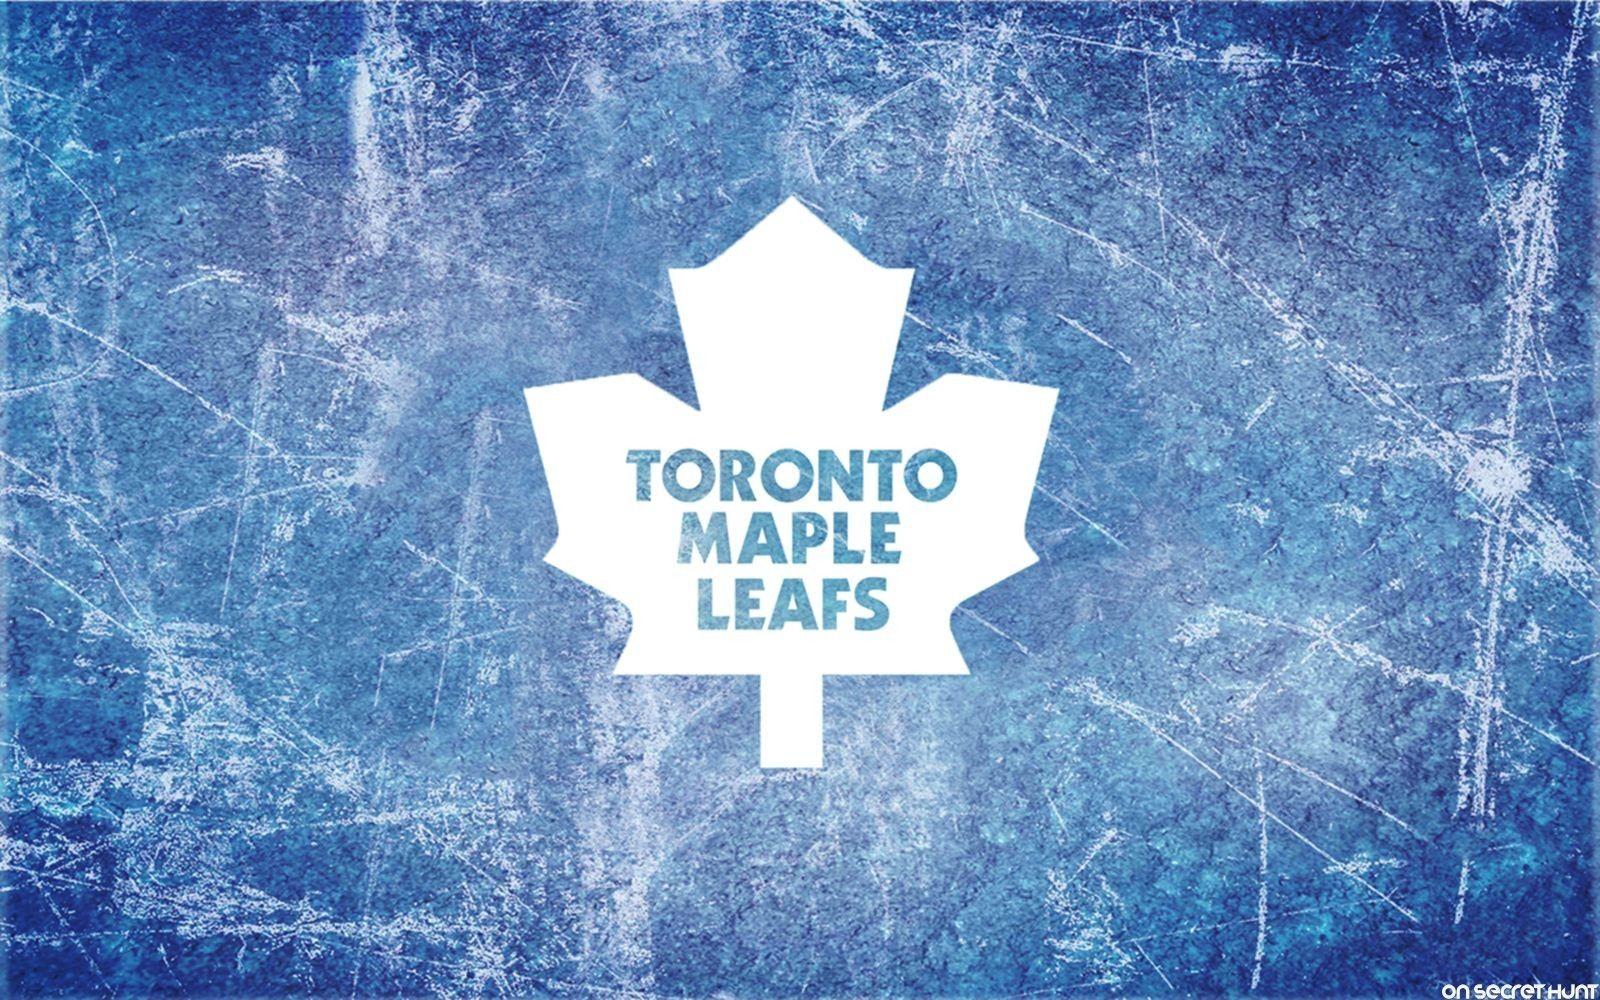 Toronto Maple Leafs Ice Hockey 2014 Wallpaper. On Secret Hunt